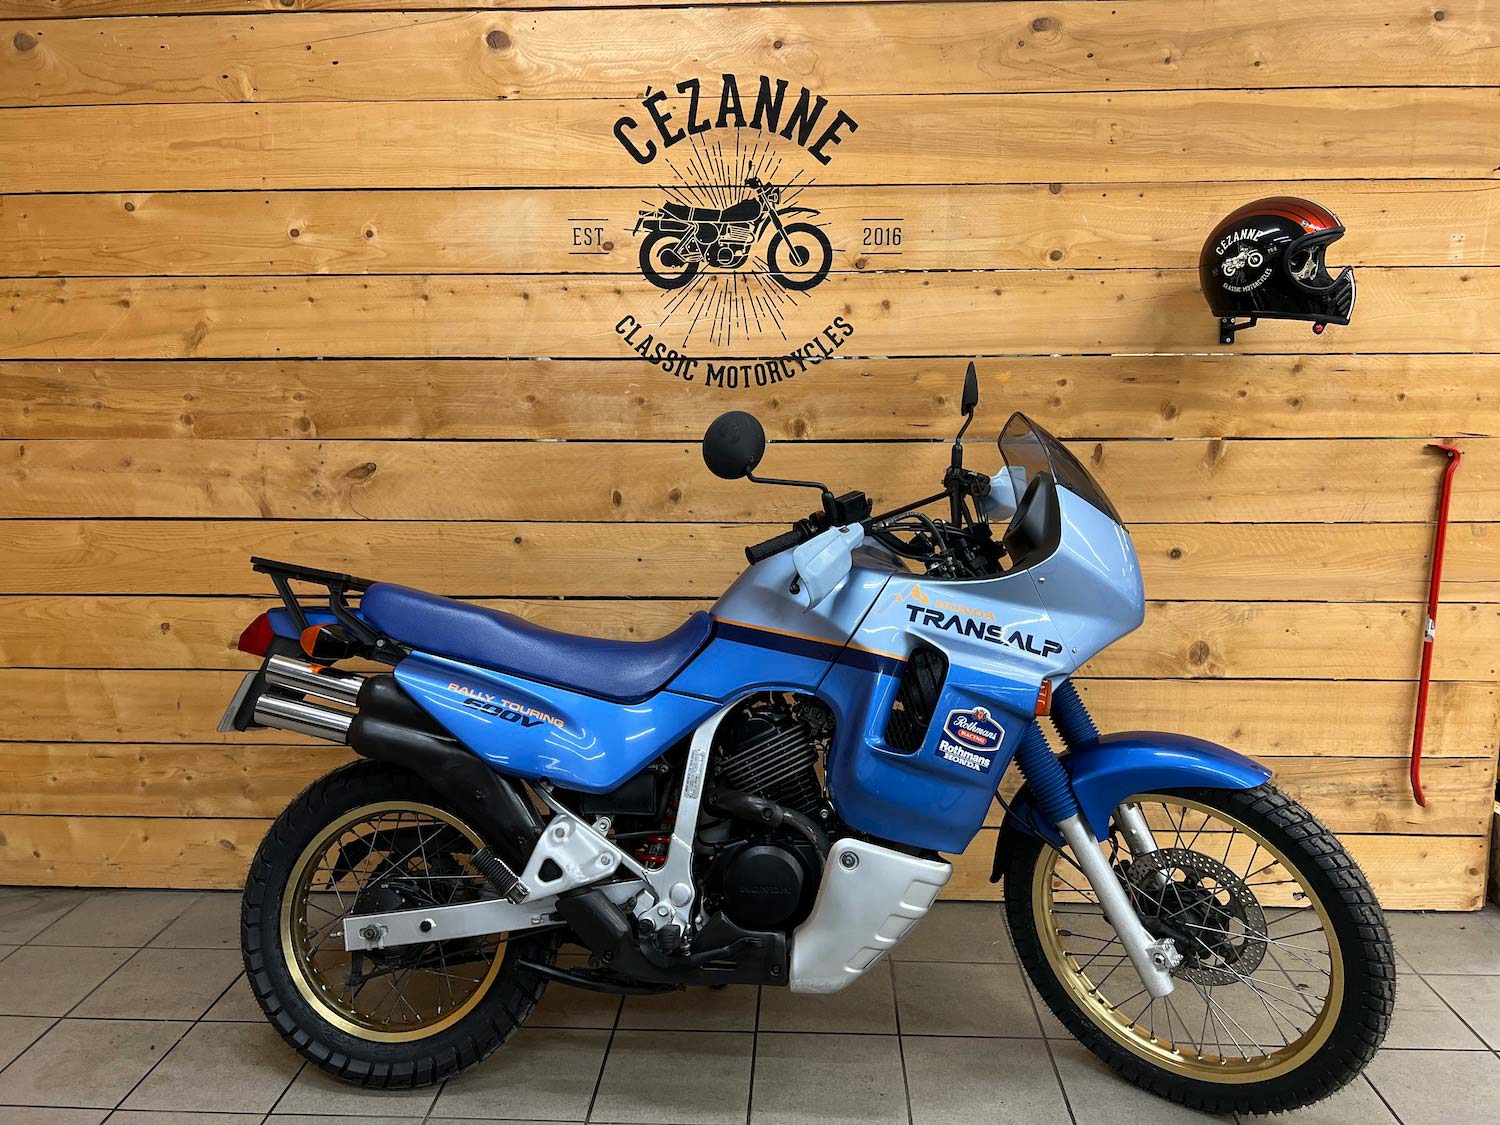 Honda_transalp_xl600v_89_Cezanne_Motorcycle_3-144.jpg